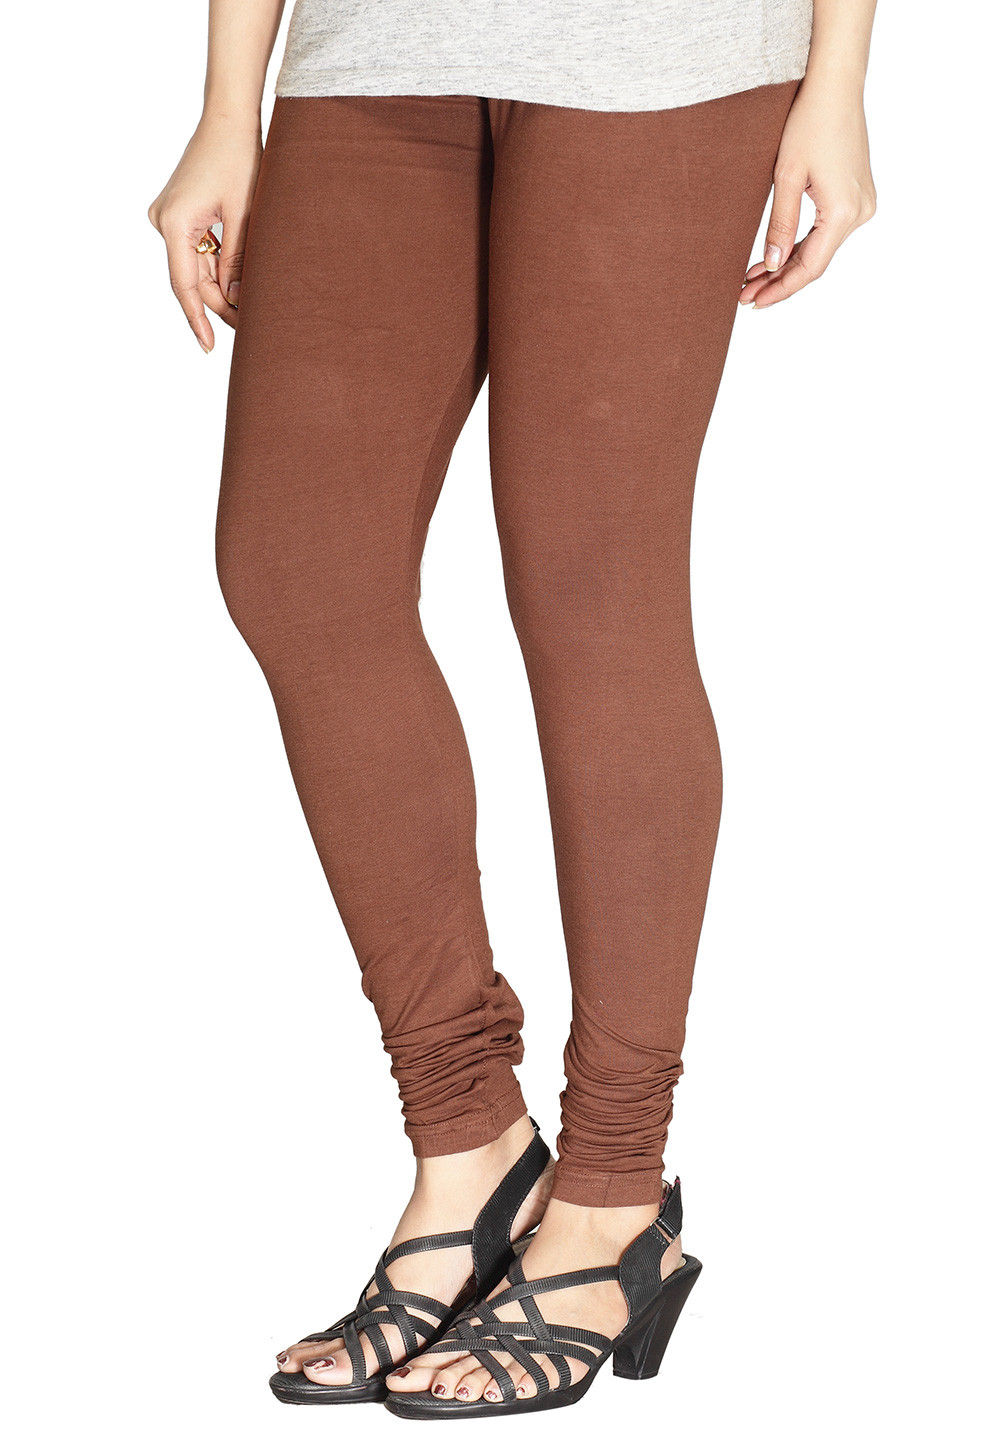 Women Brown Cotton Lycra Leggings, Casual Wear, Slim Fit at Rs 120 in New  Delhi